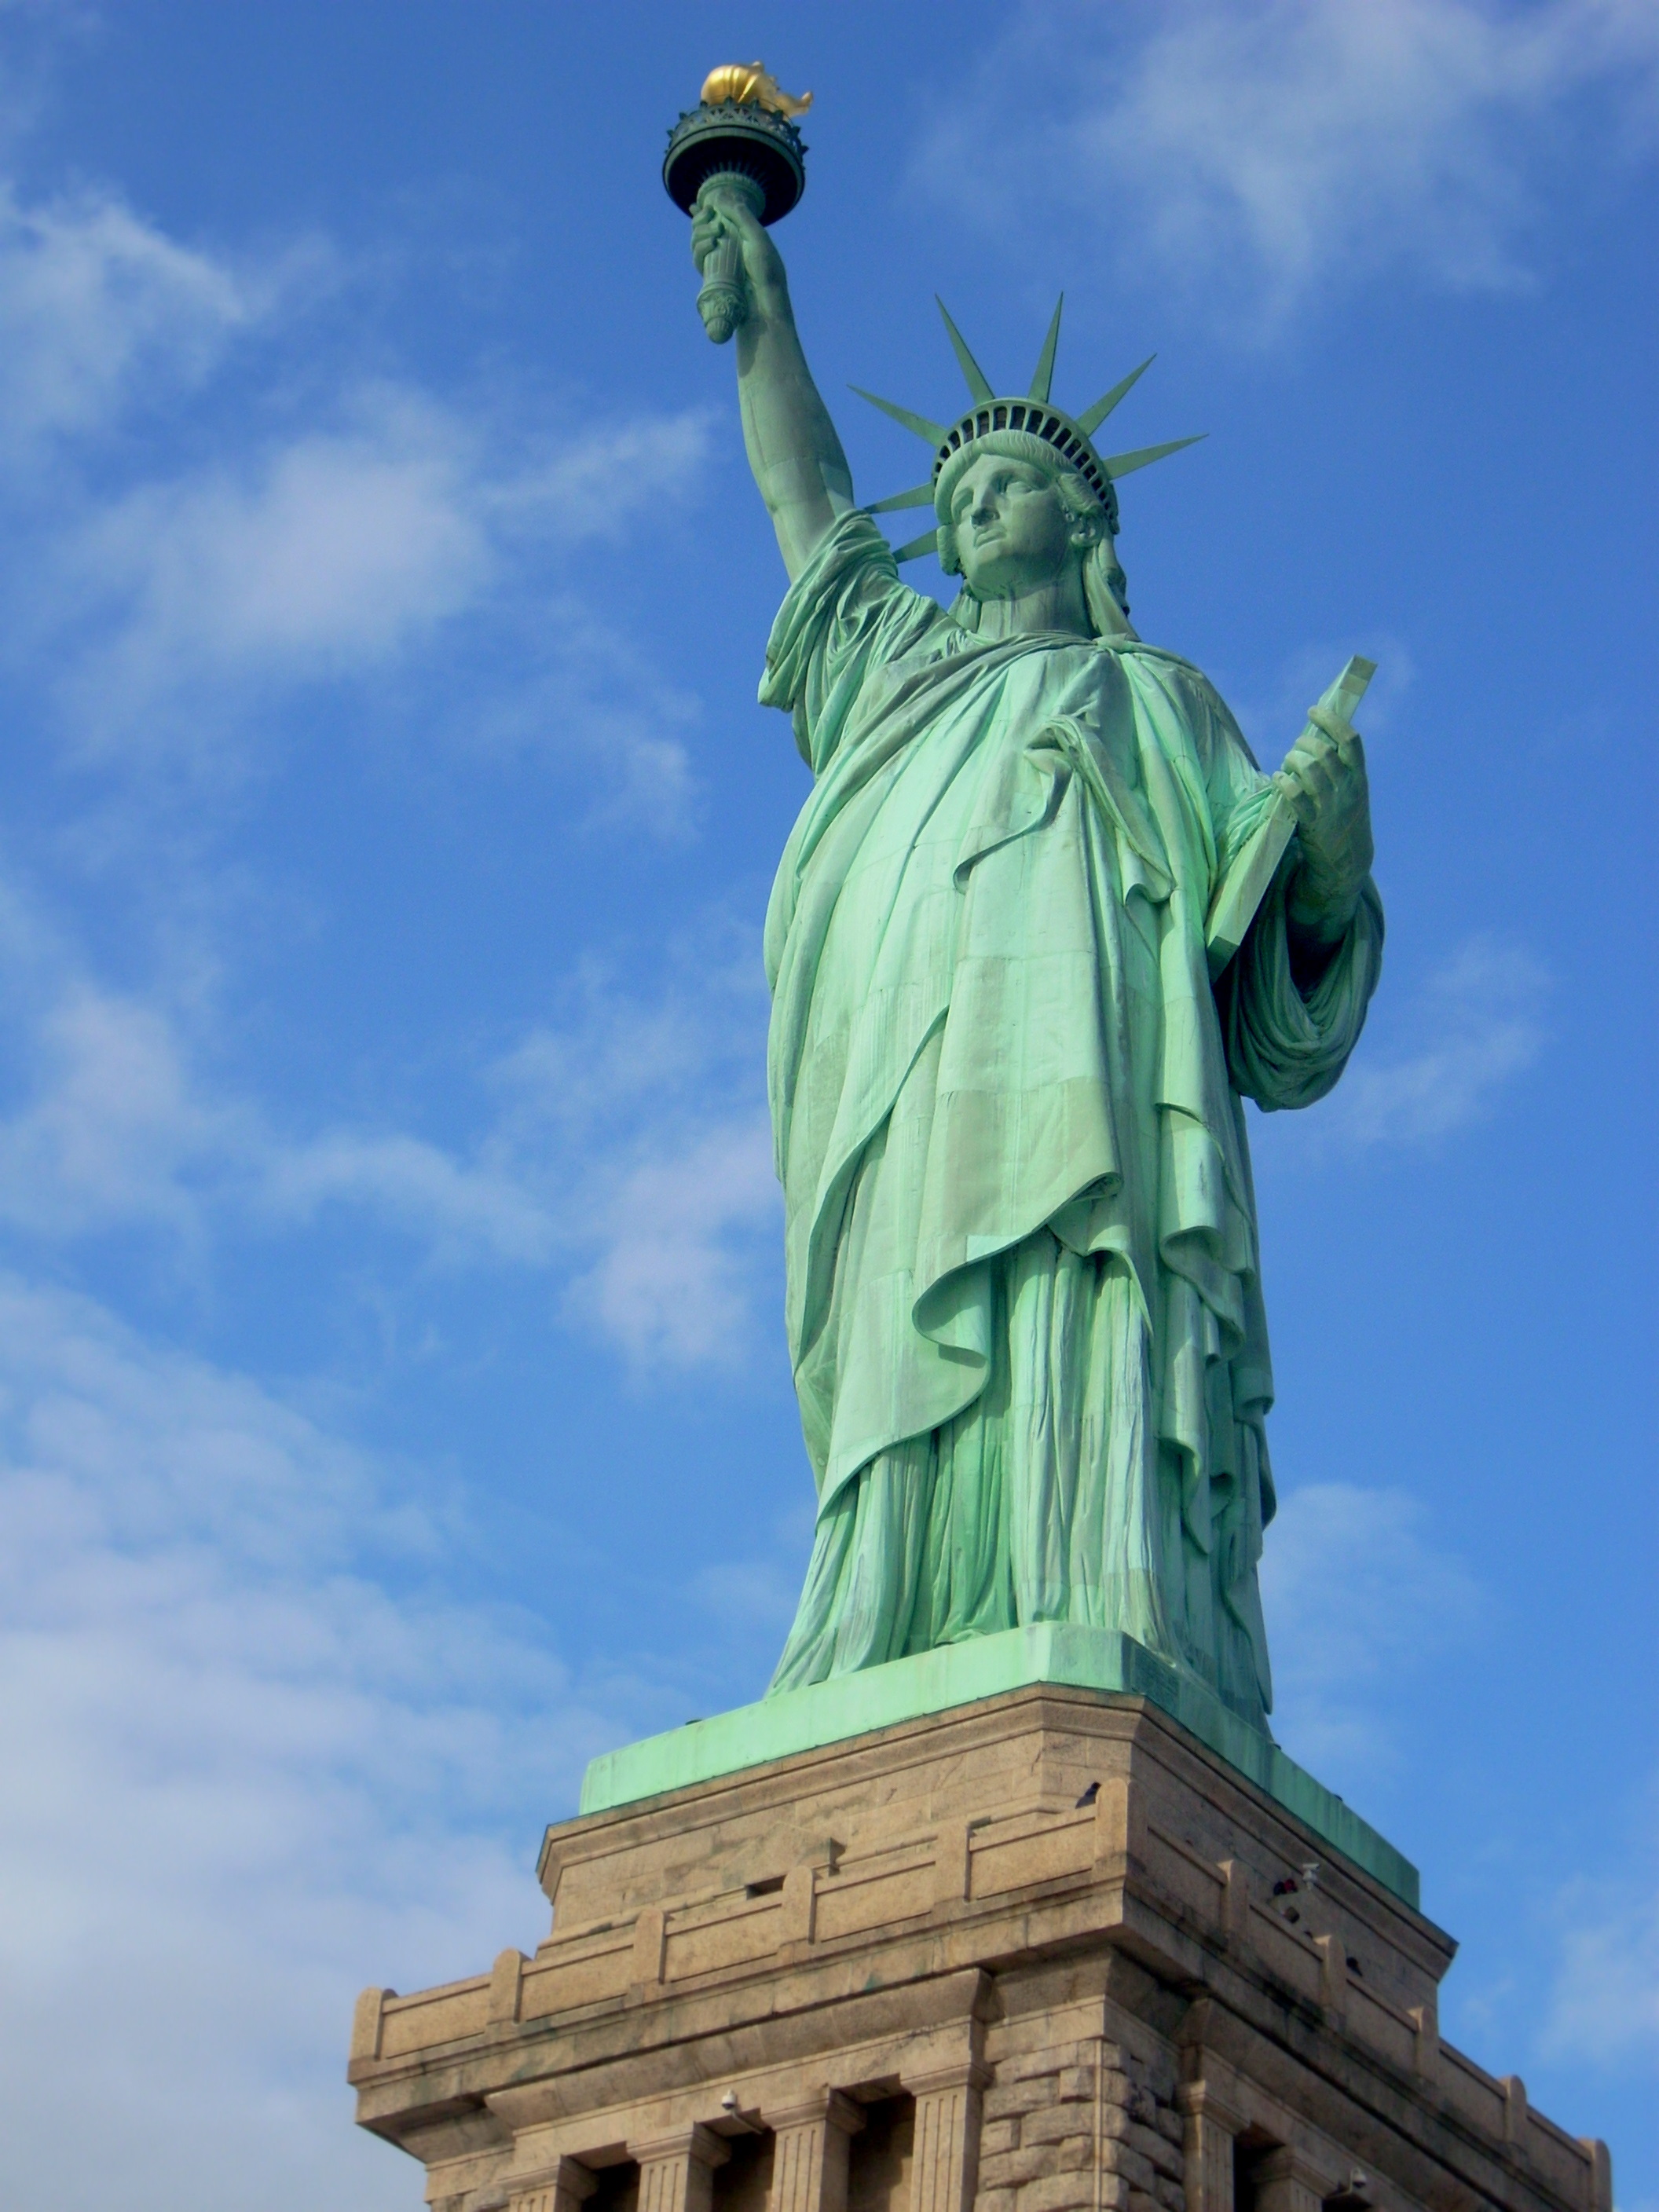 Statue Of Liberty | Free Images at Clker.com - vector clip art online